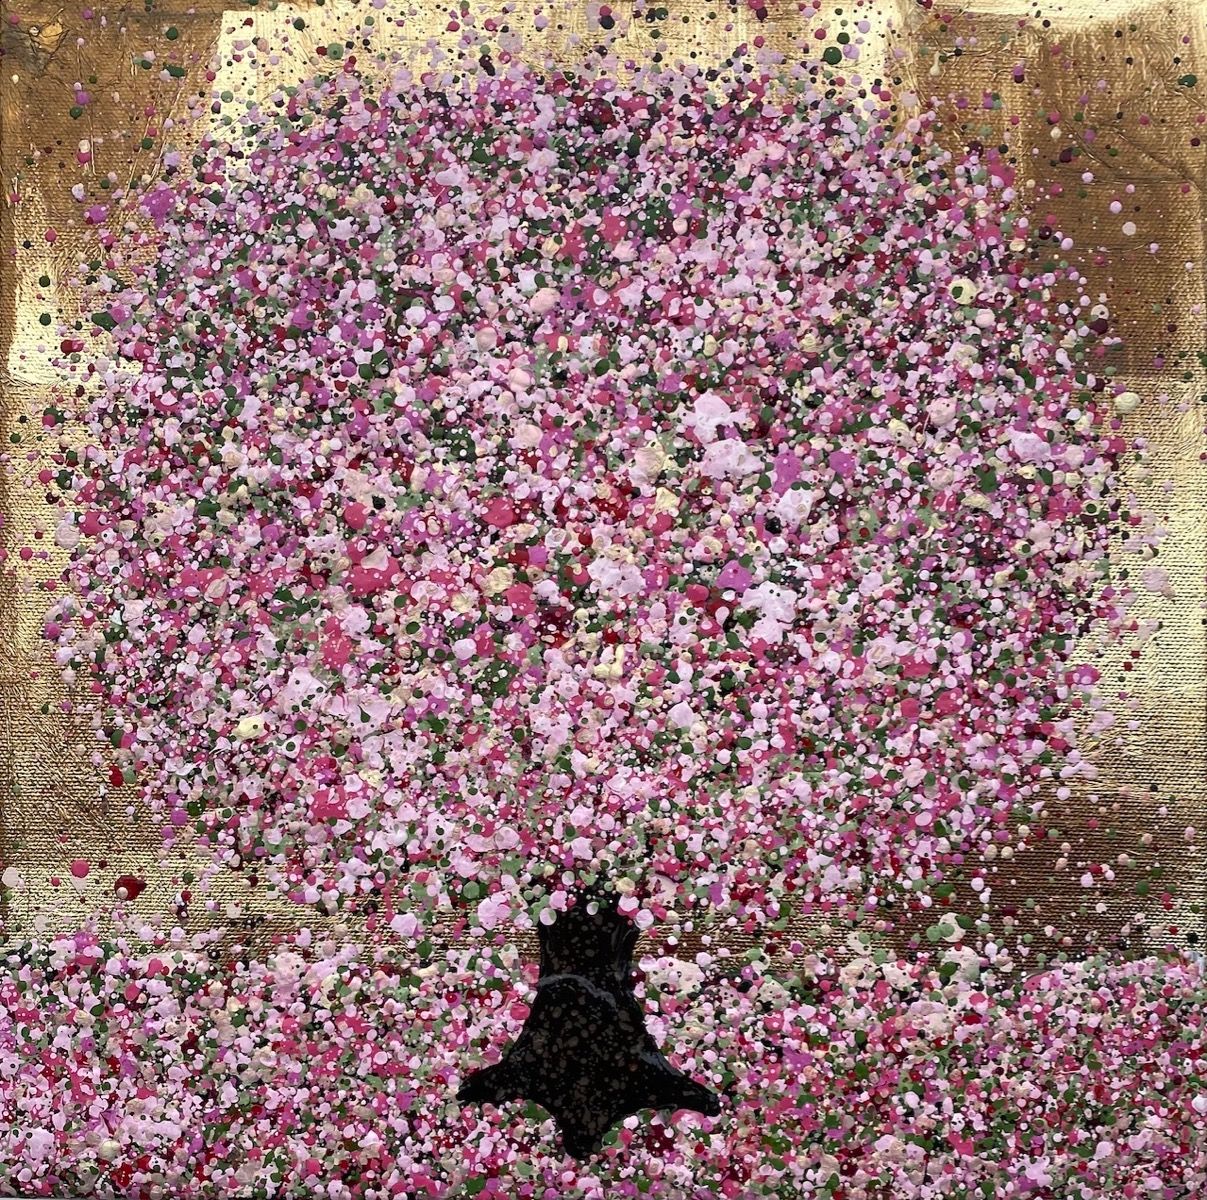 Everlasting Cherry Blossom III by Nicky Chubb